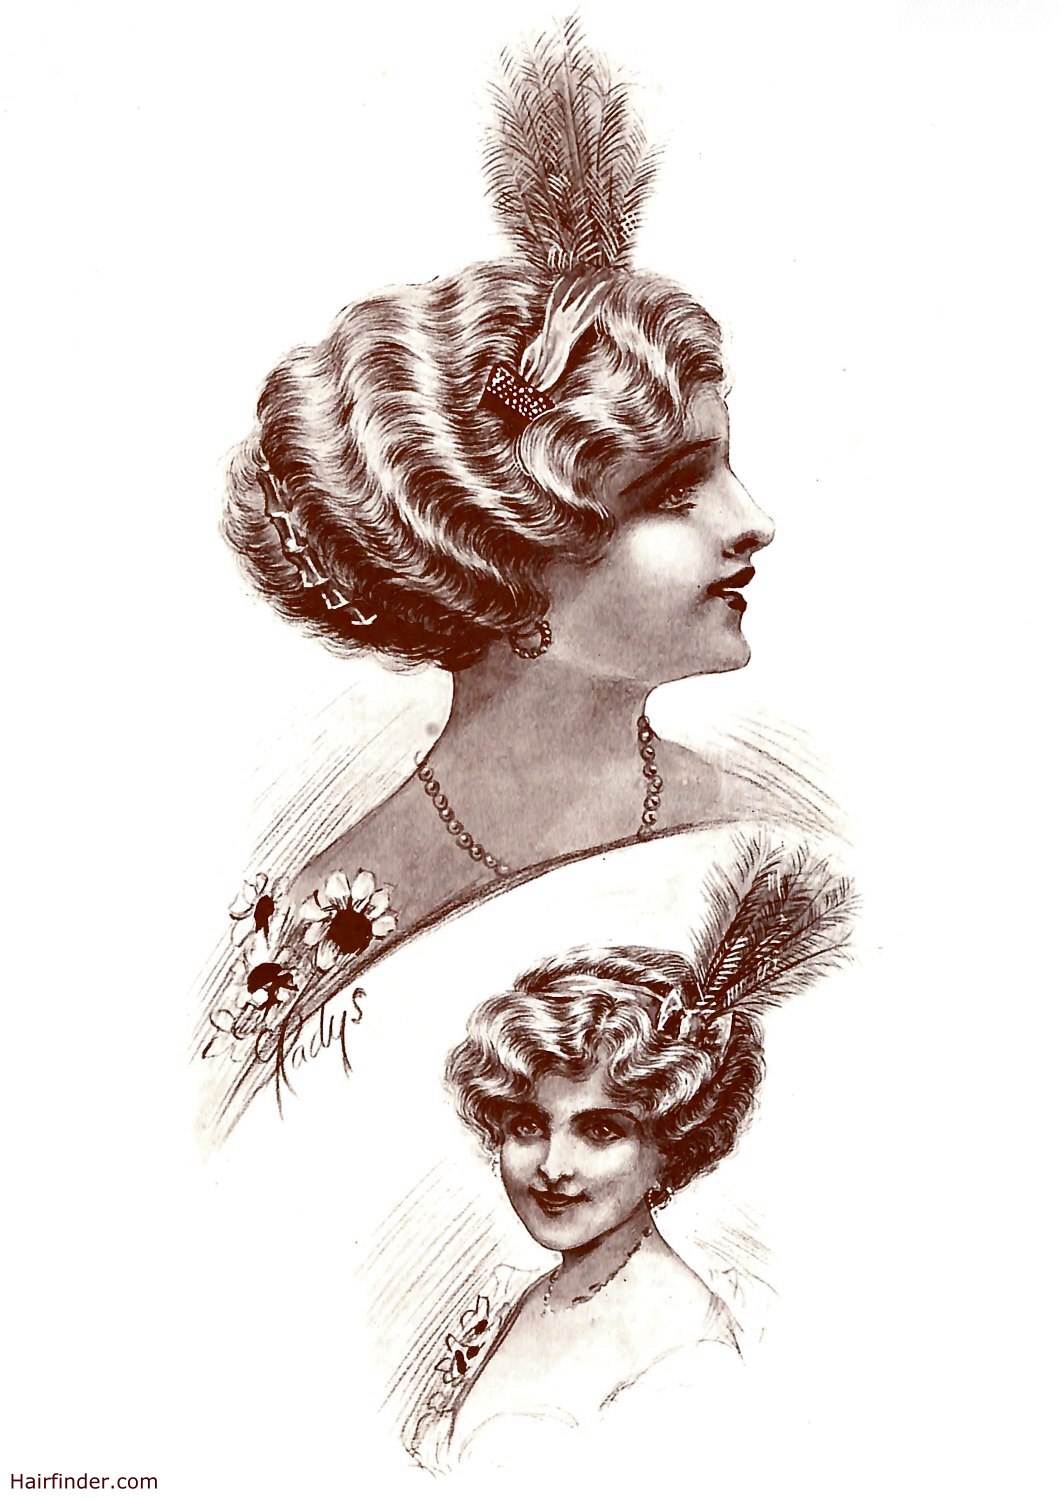 World War One era hair | Edwardian and Gatsby vintage hairstyles 1909 - 1914